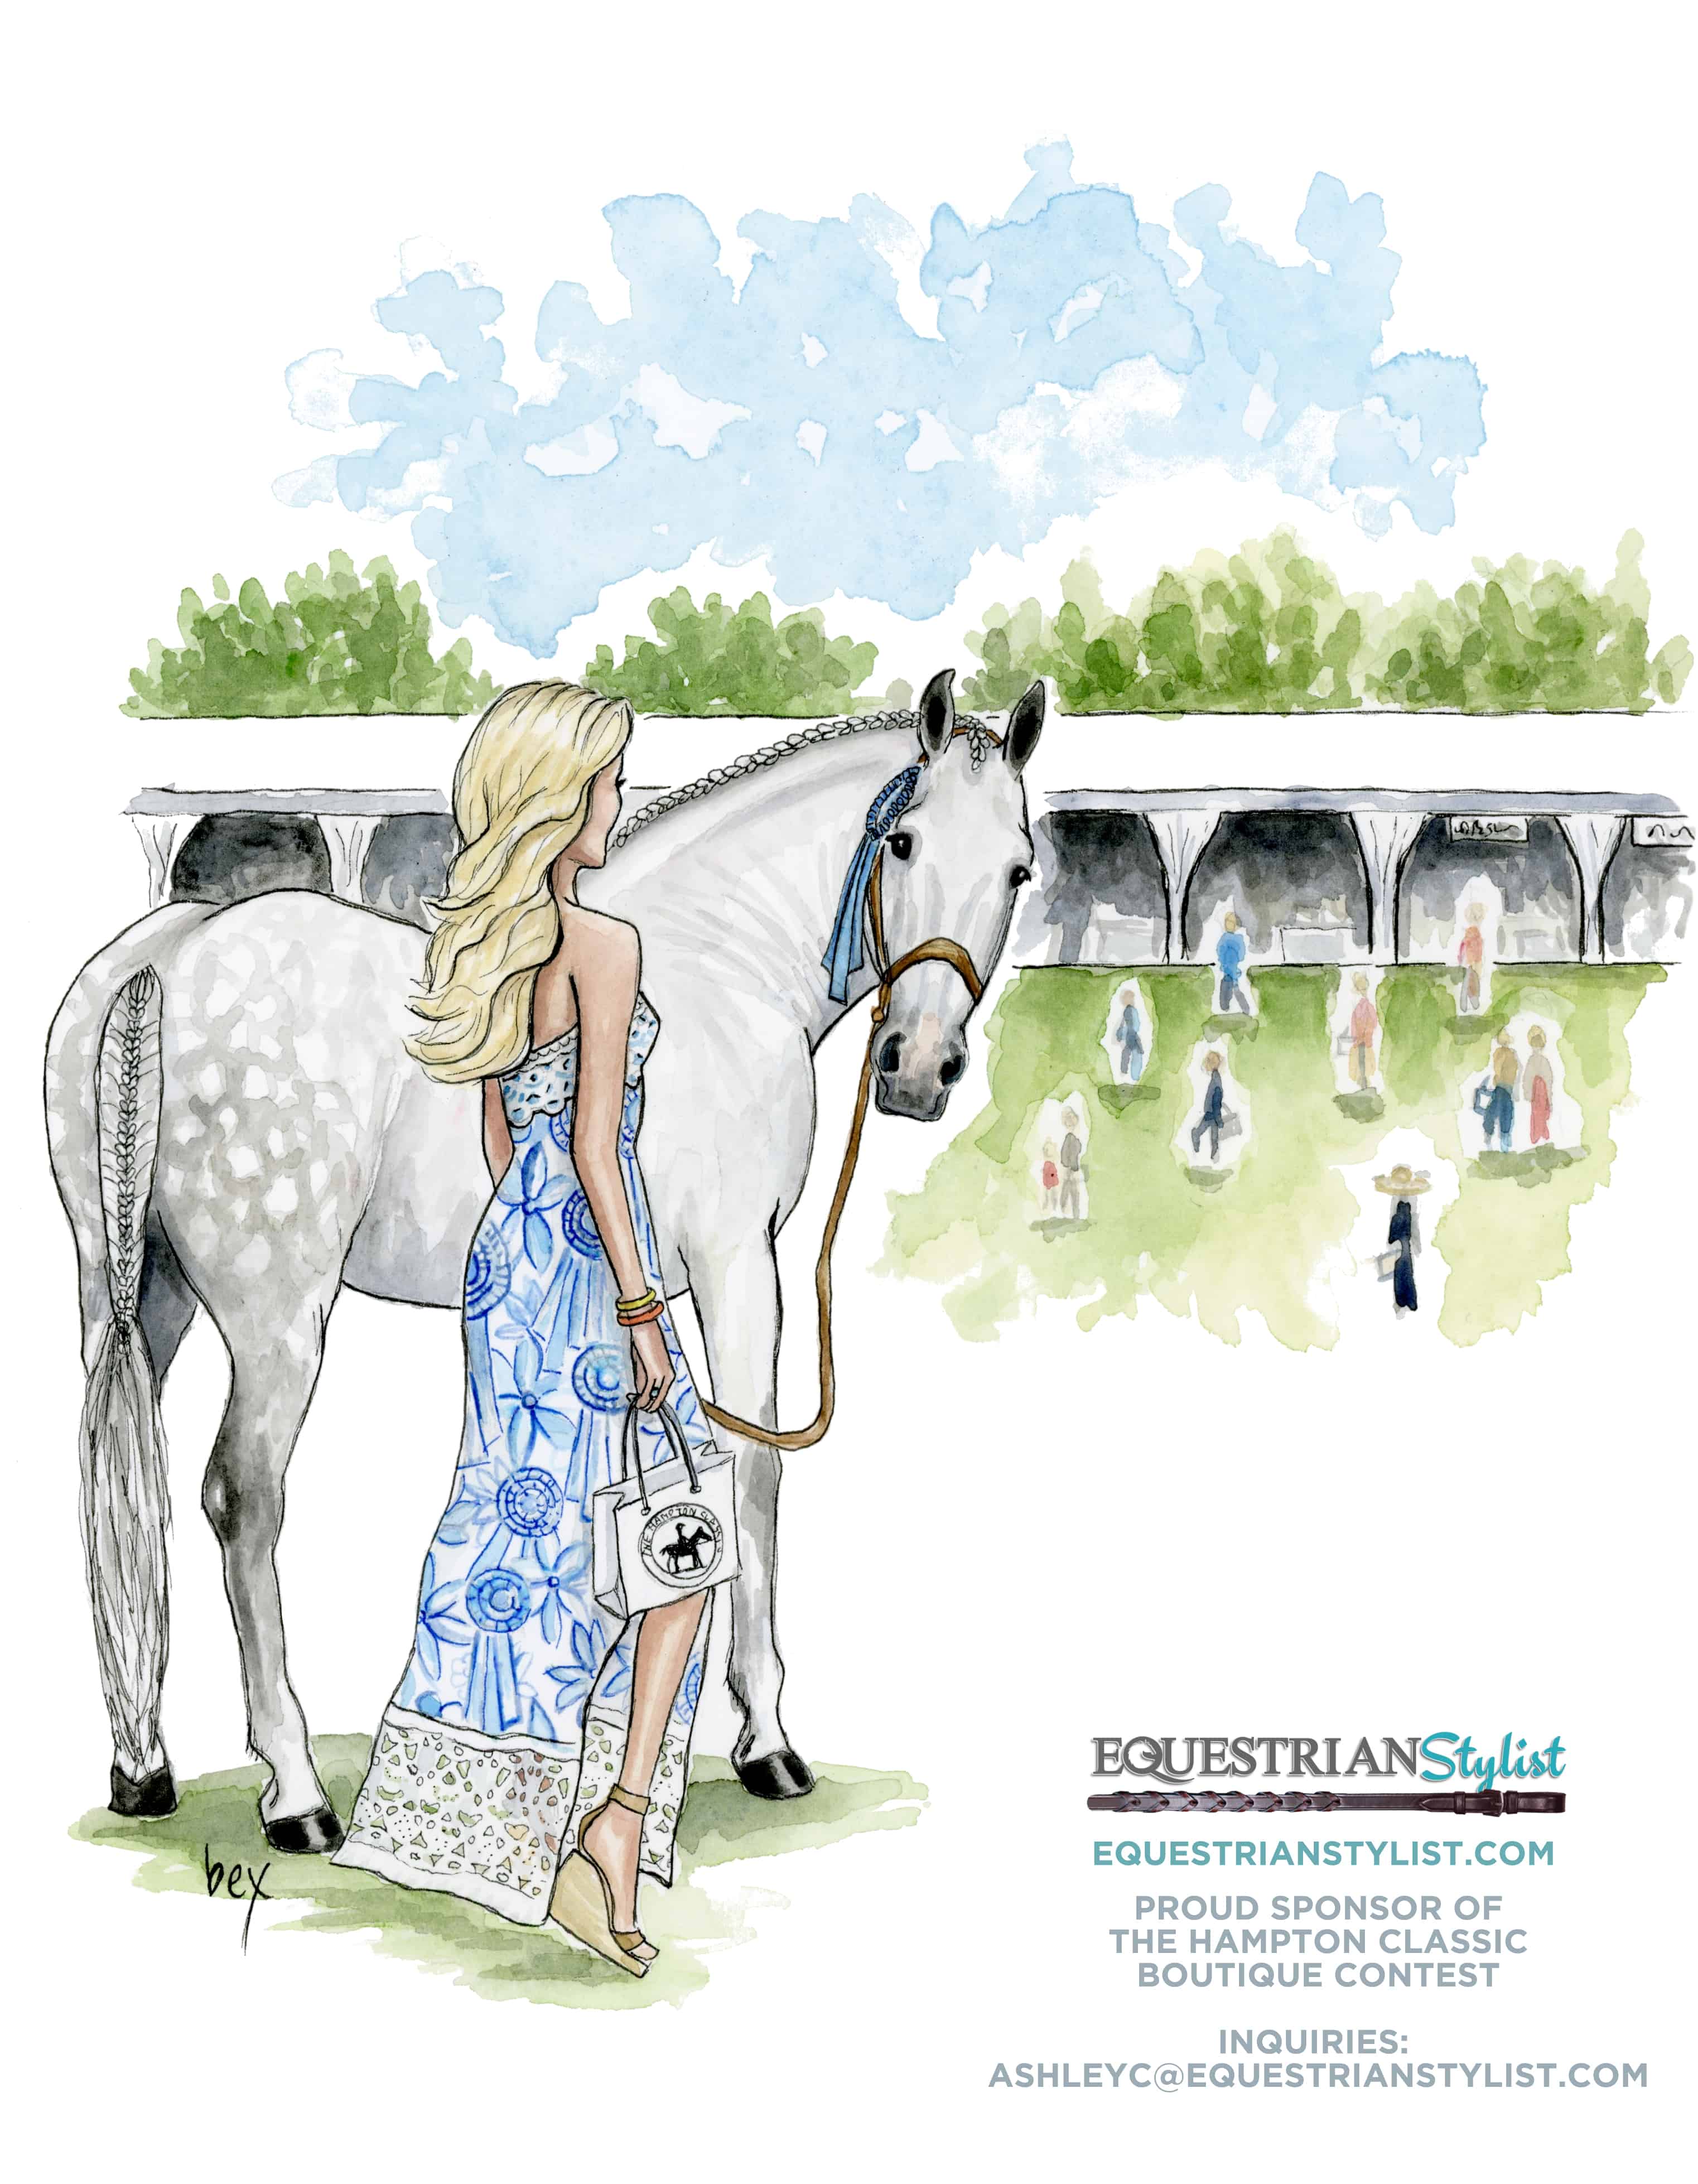 Equestrian Stylist: Official 2015 Hampton Classic Sponsor